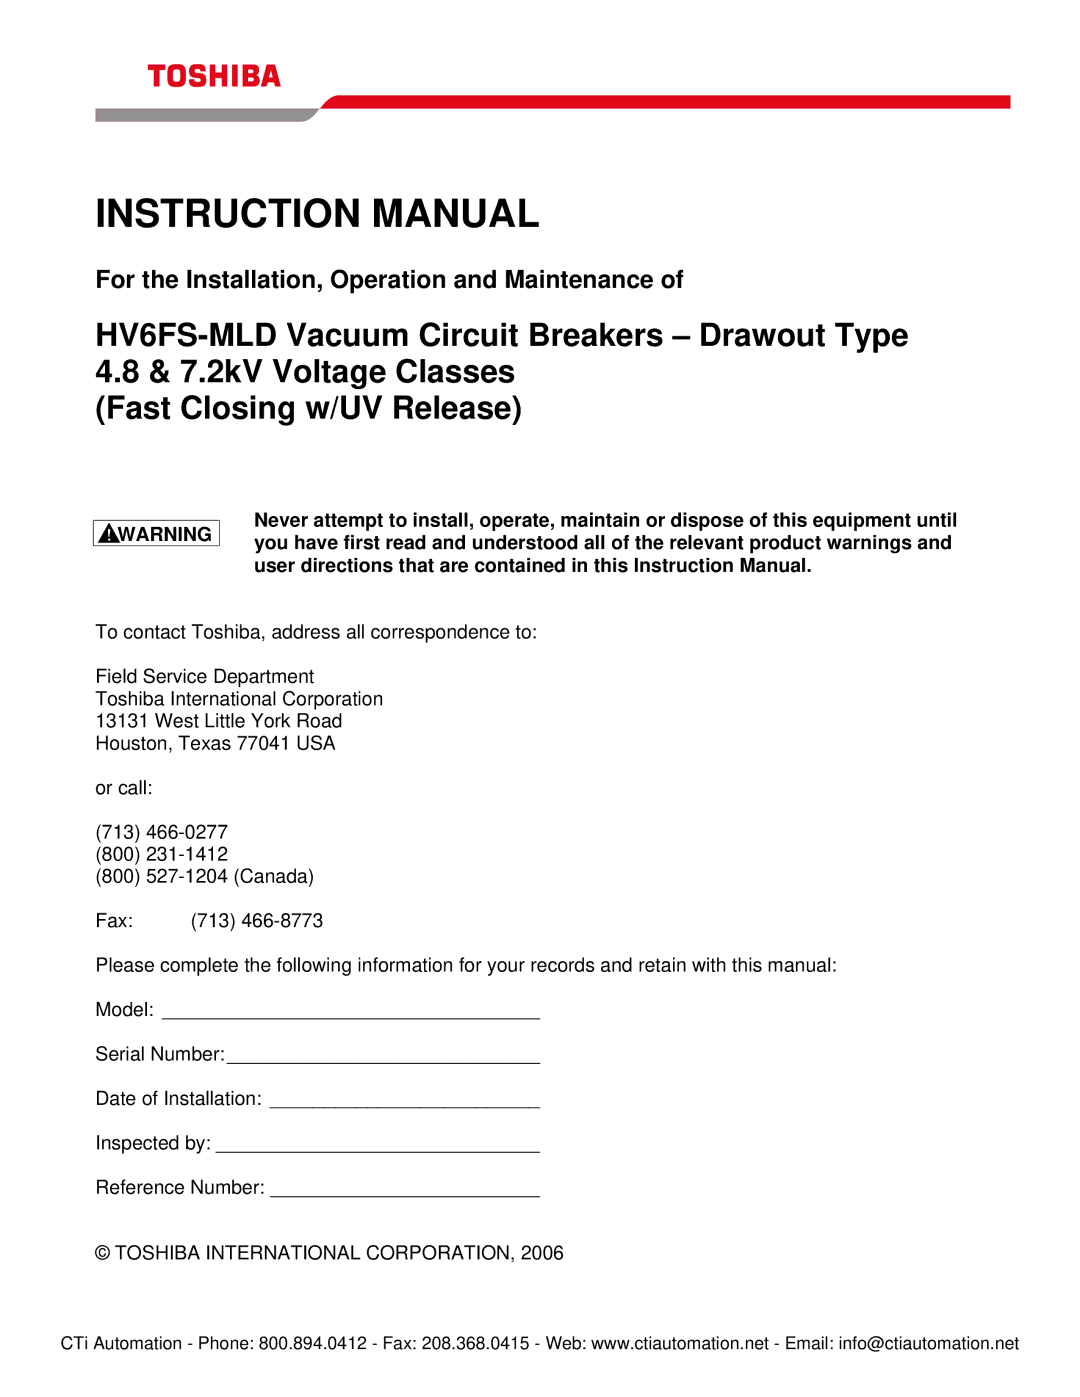 Toshiba HV6FS-MLD instruction manual Toshiba International Corporation 